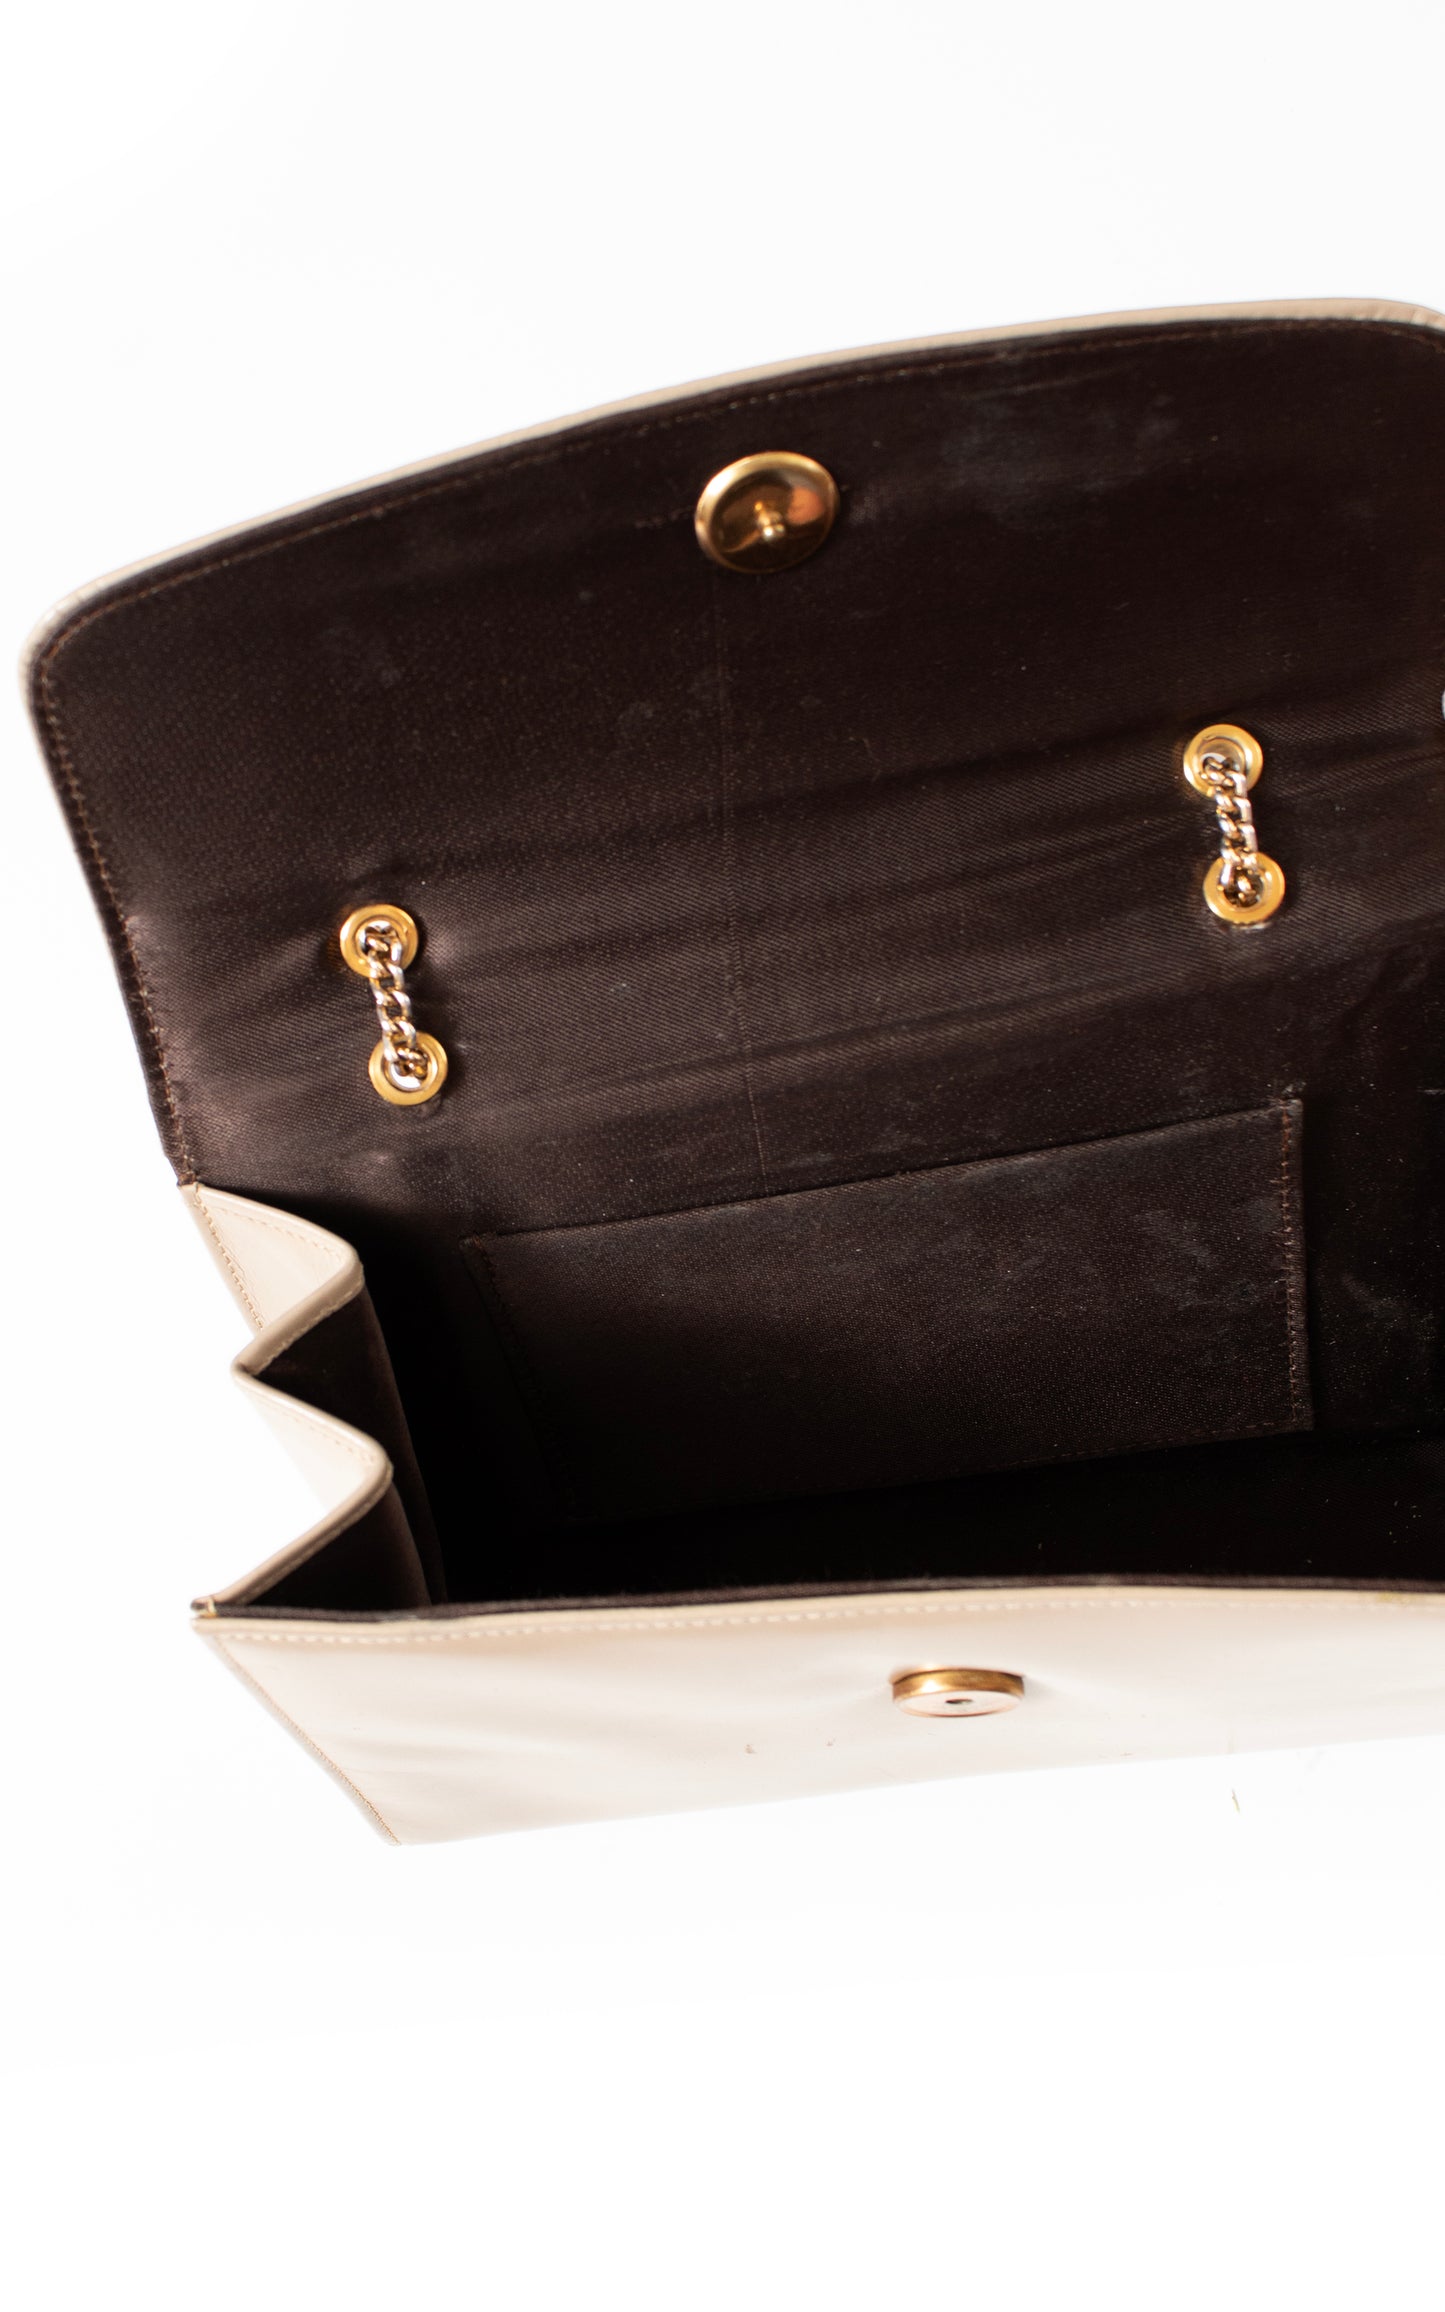 1970s Dual-Length Strap Leather Handbag